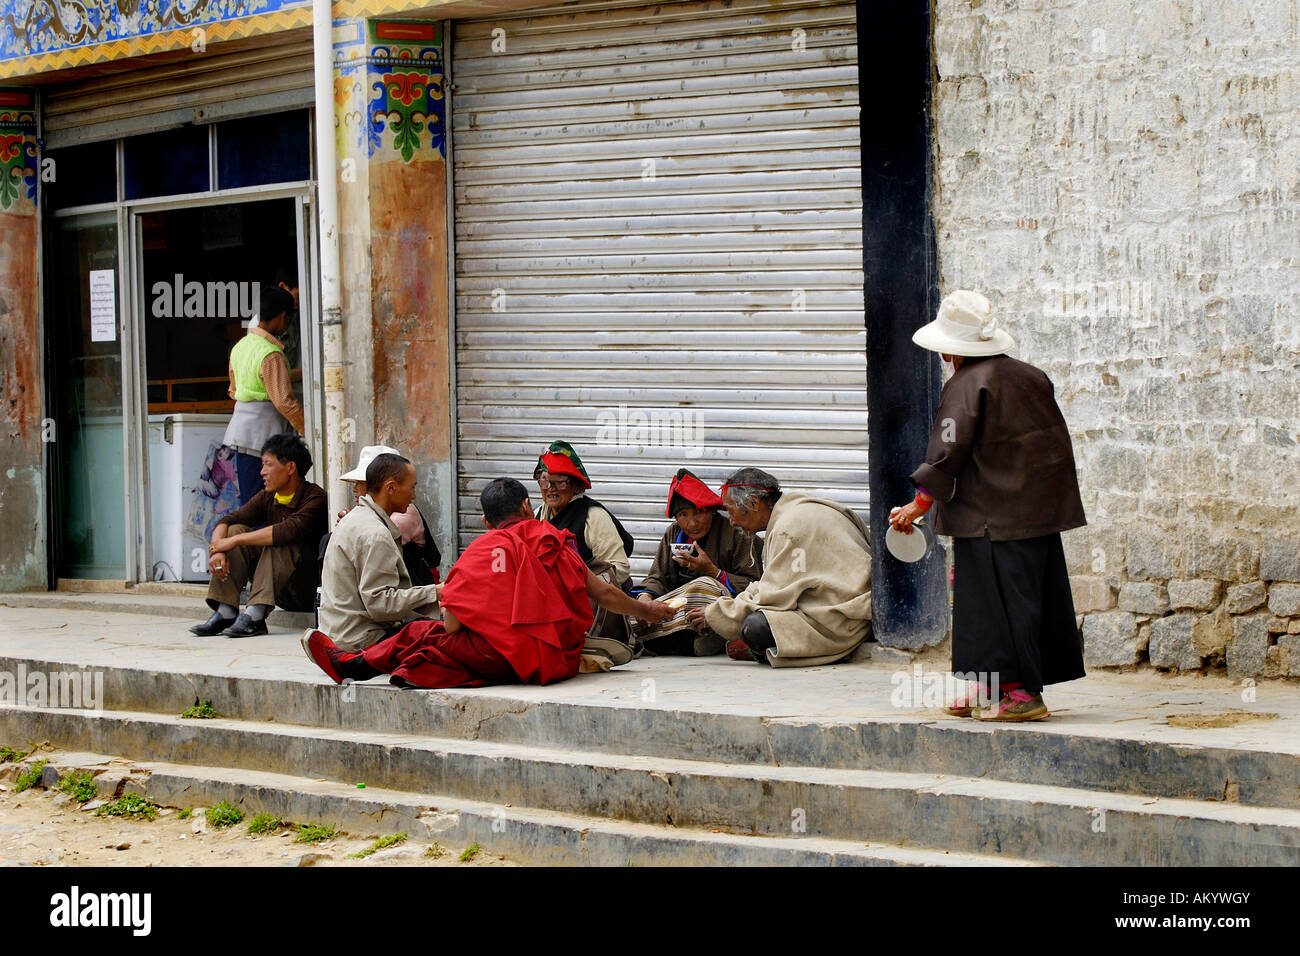 Friar and pilgrims, Samye monastery near Lhasa, Tibet, Asia Stock Photo